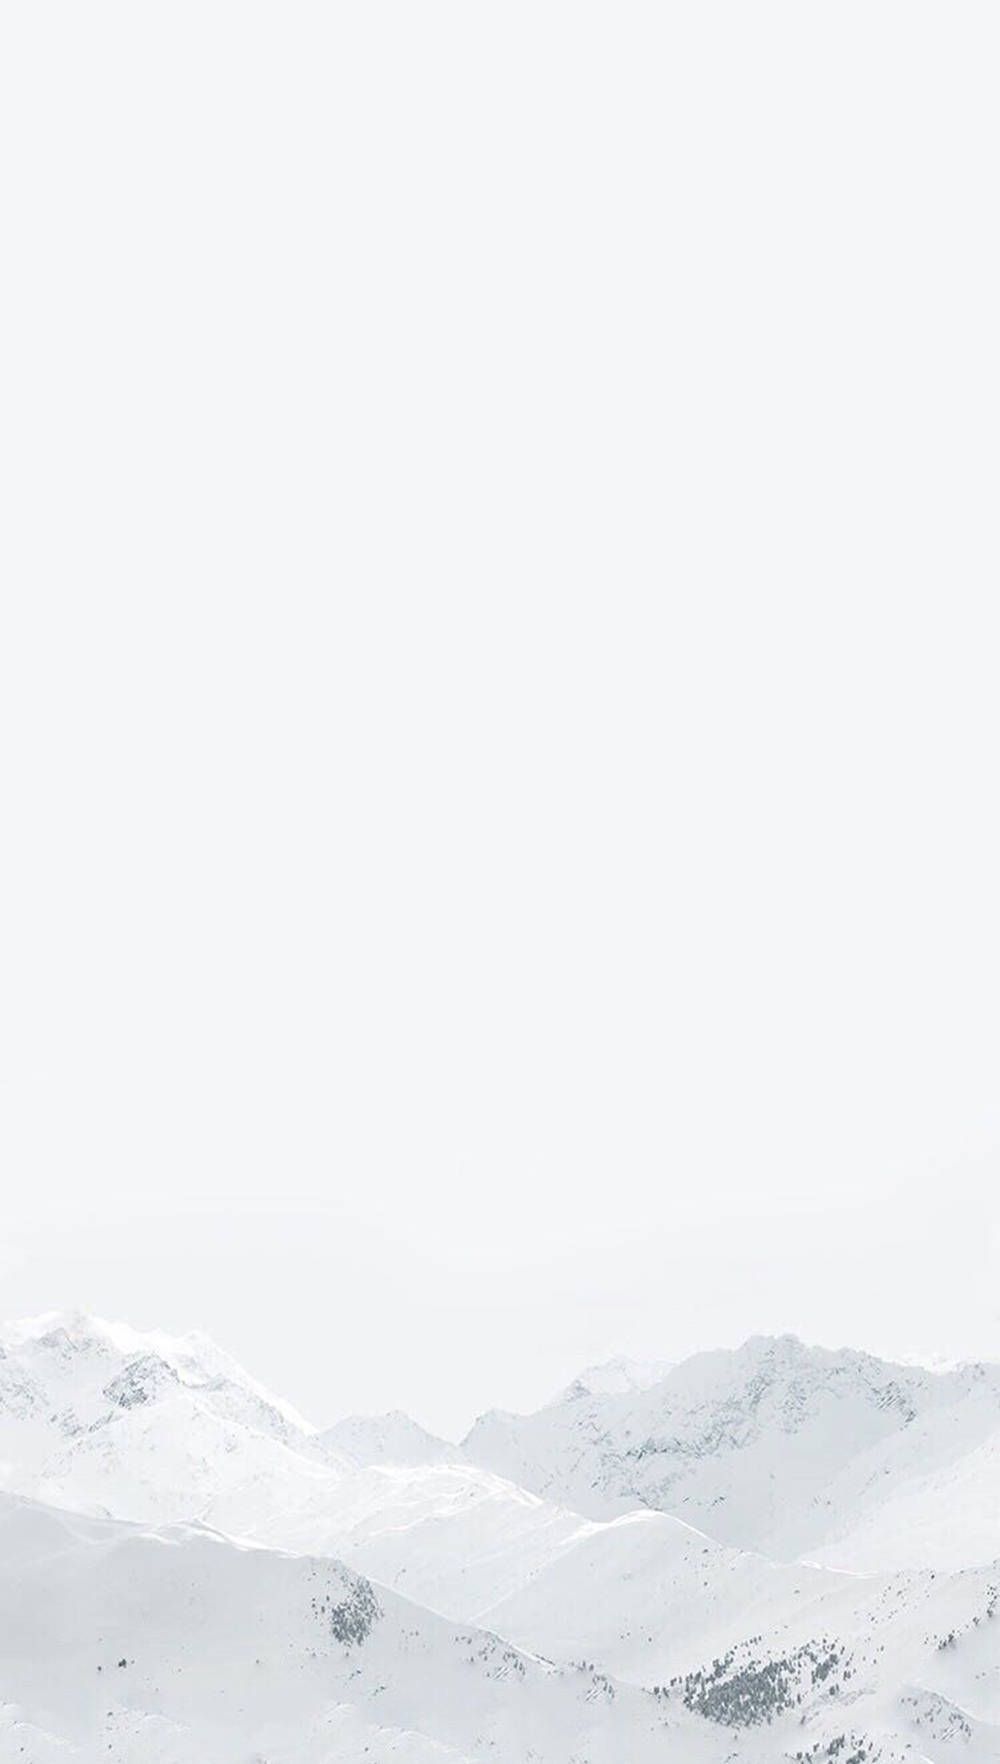 A snowboarder riding down a snow covered mountain. - Clean, cute white